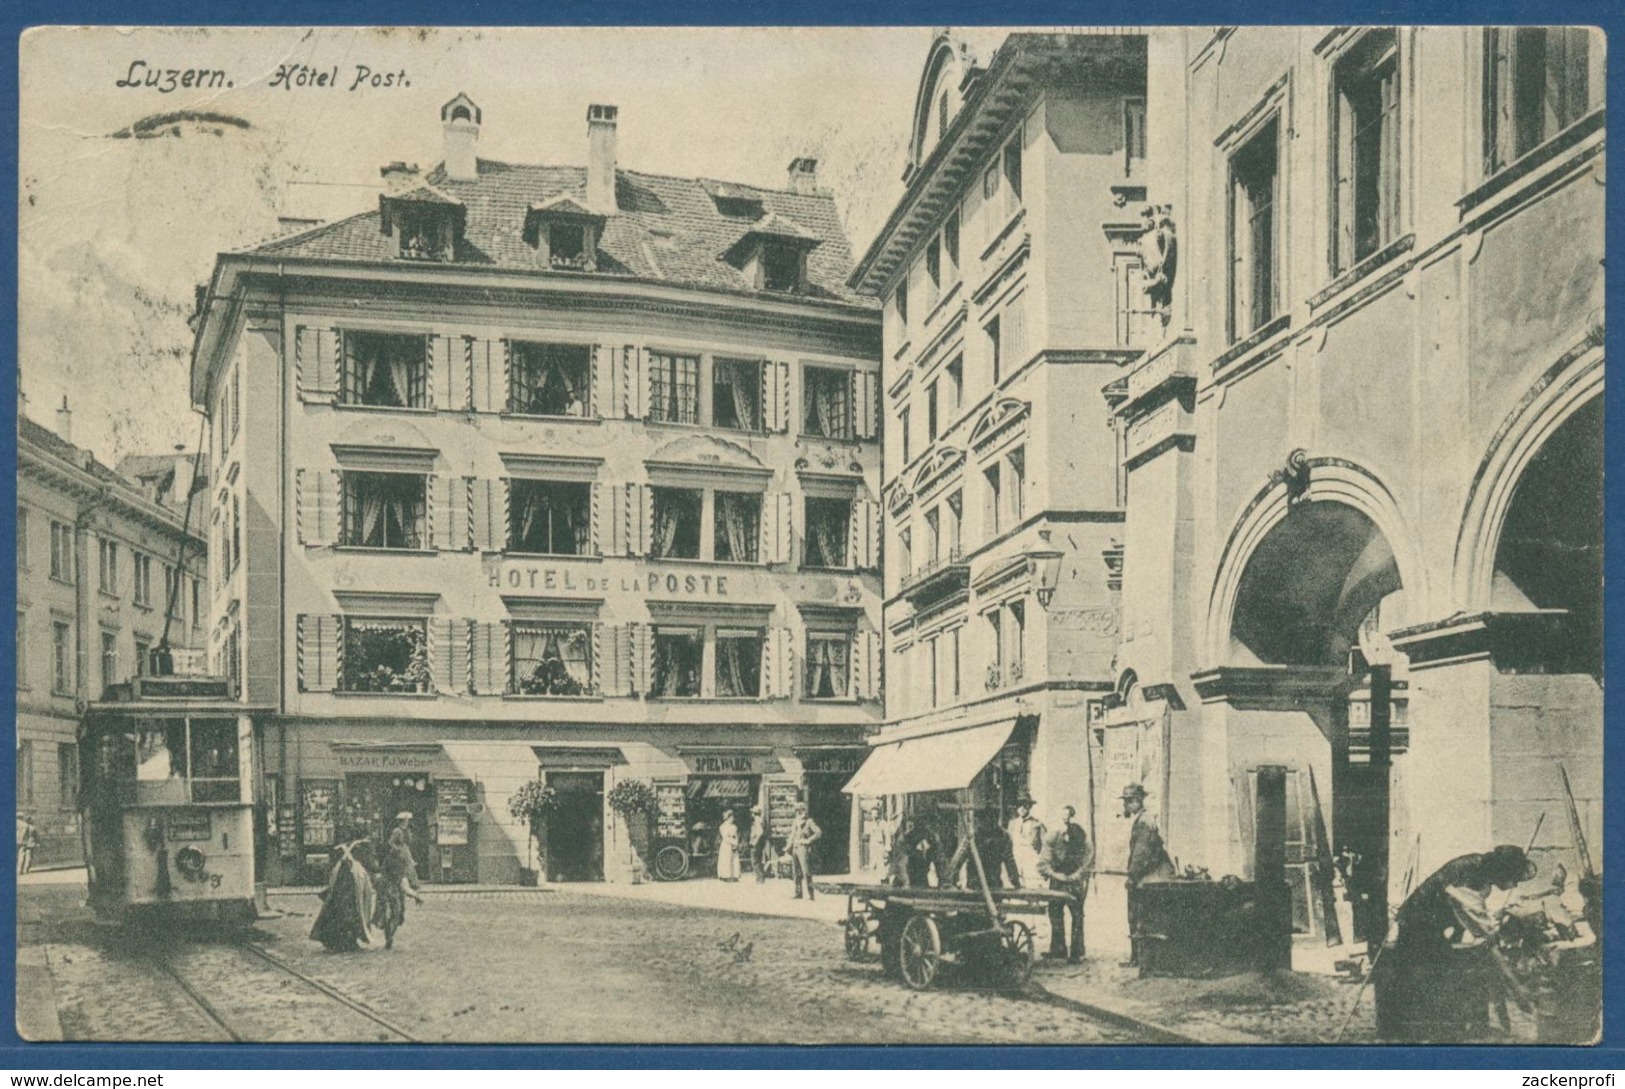 Luzern Hotel Post, Gelaufen 1909 Marke Fehlt (AK2585) - Lucerne